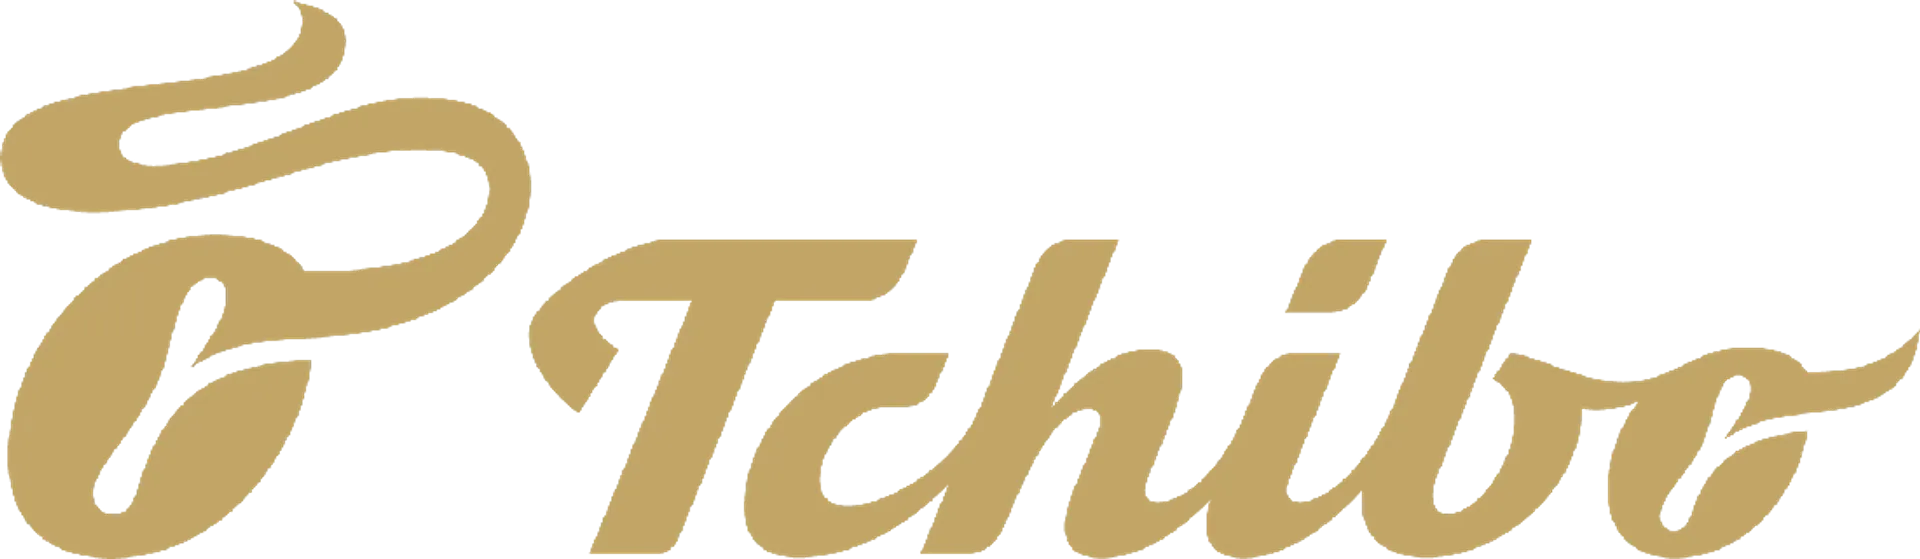 TCHIBO logo of current flyer